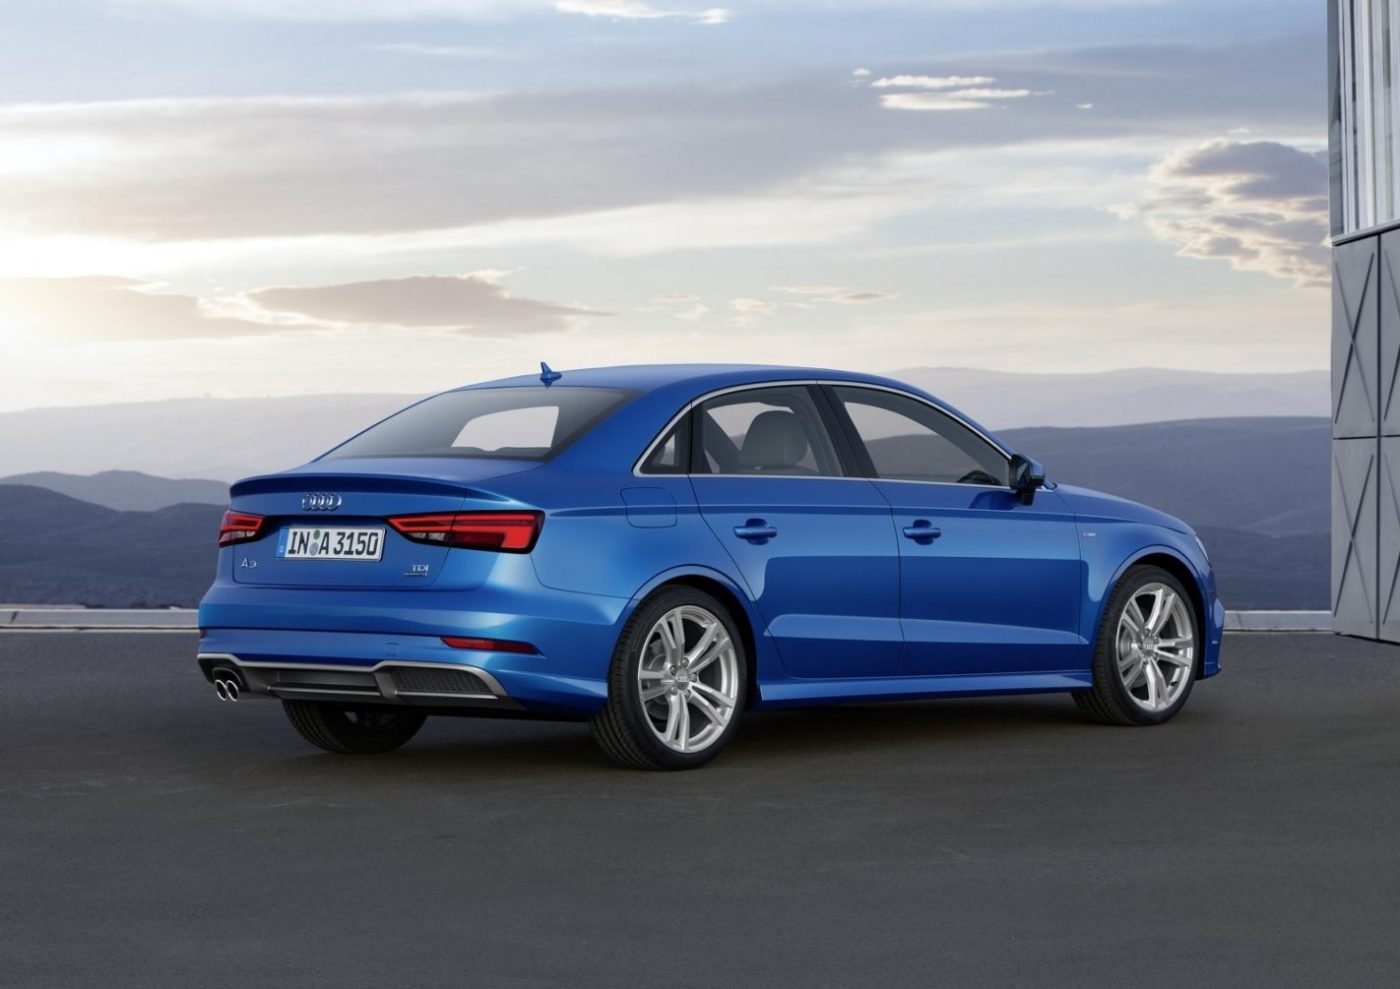 Audi A3 Coupe Exterior HD Wallpaper Car Release Pre